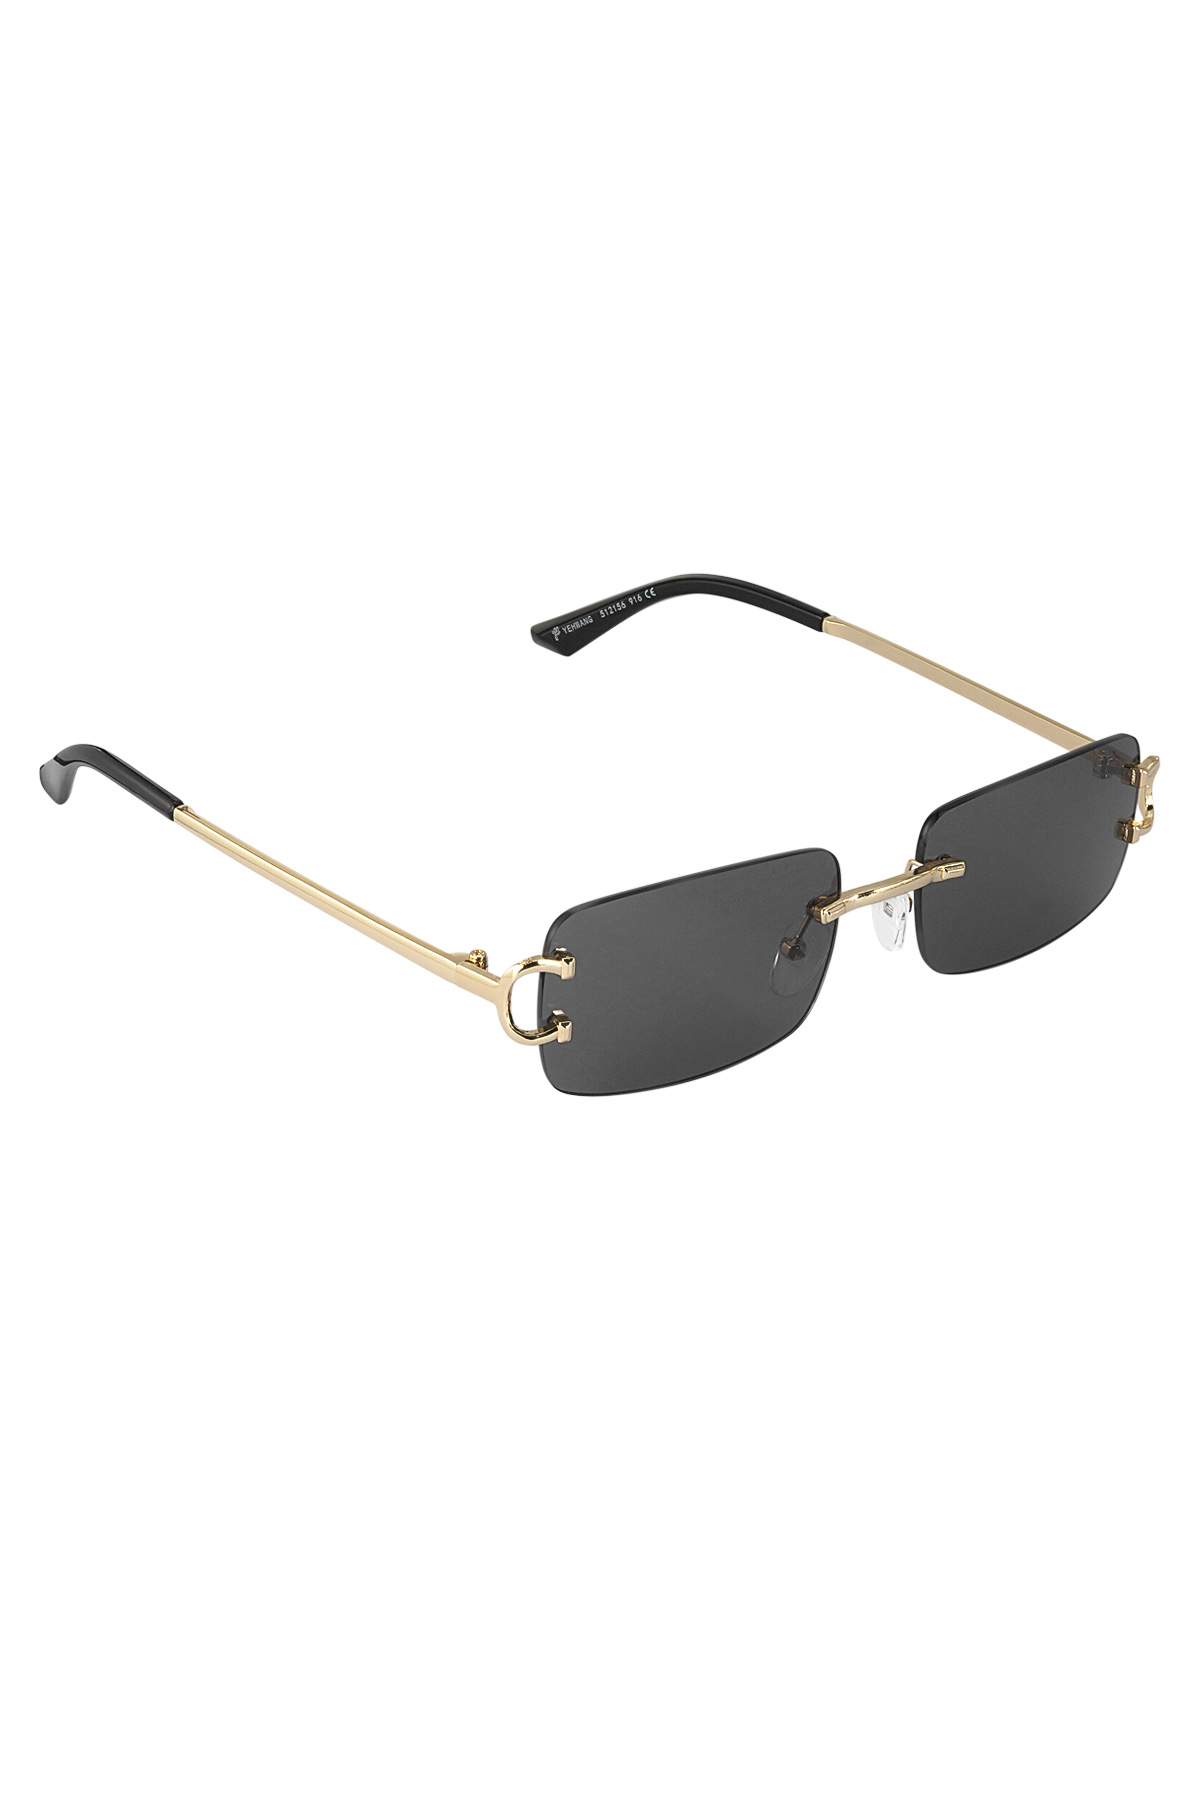 Sunglasses Sunbeam - black gold